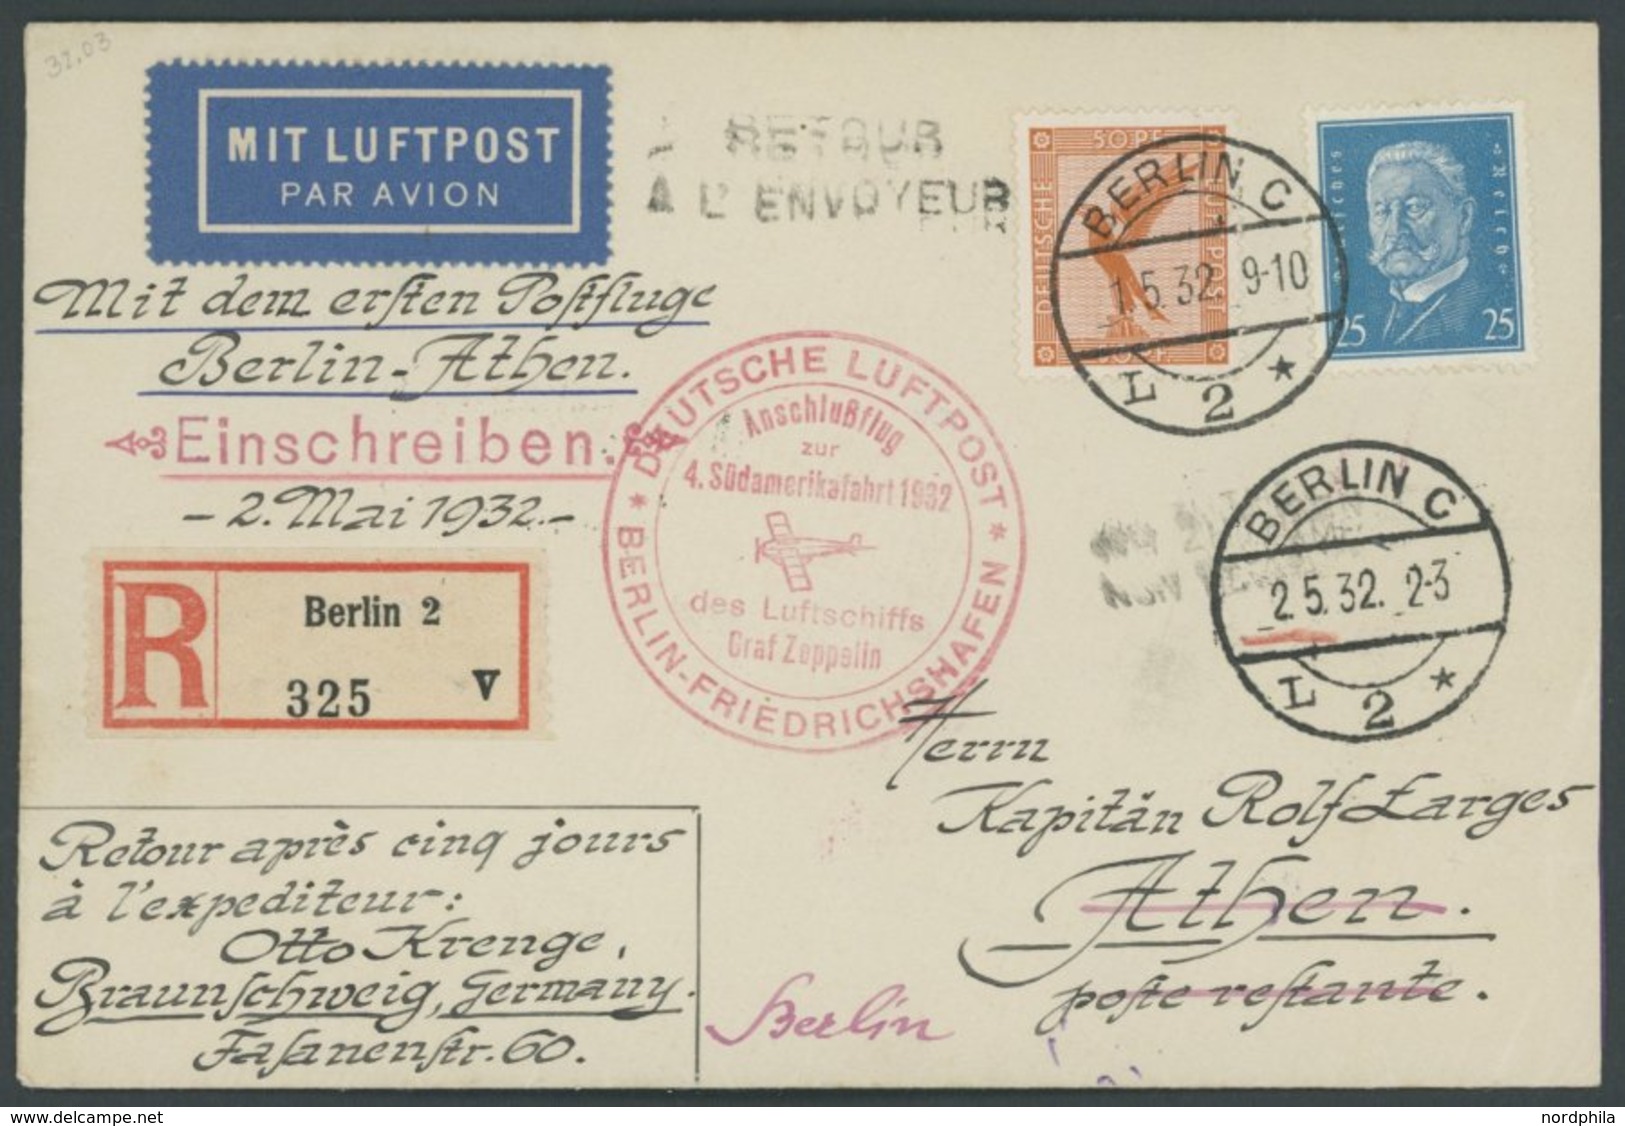 ZEPPELINPOST 157B BRIEF, 1932, 4. Südamerikafahrt, Anschlußflug Berlin, Erstflug Berlin-Athen, L2 Retour-Stempel, Einsch - Airmail & Zeppelin